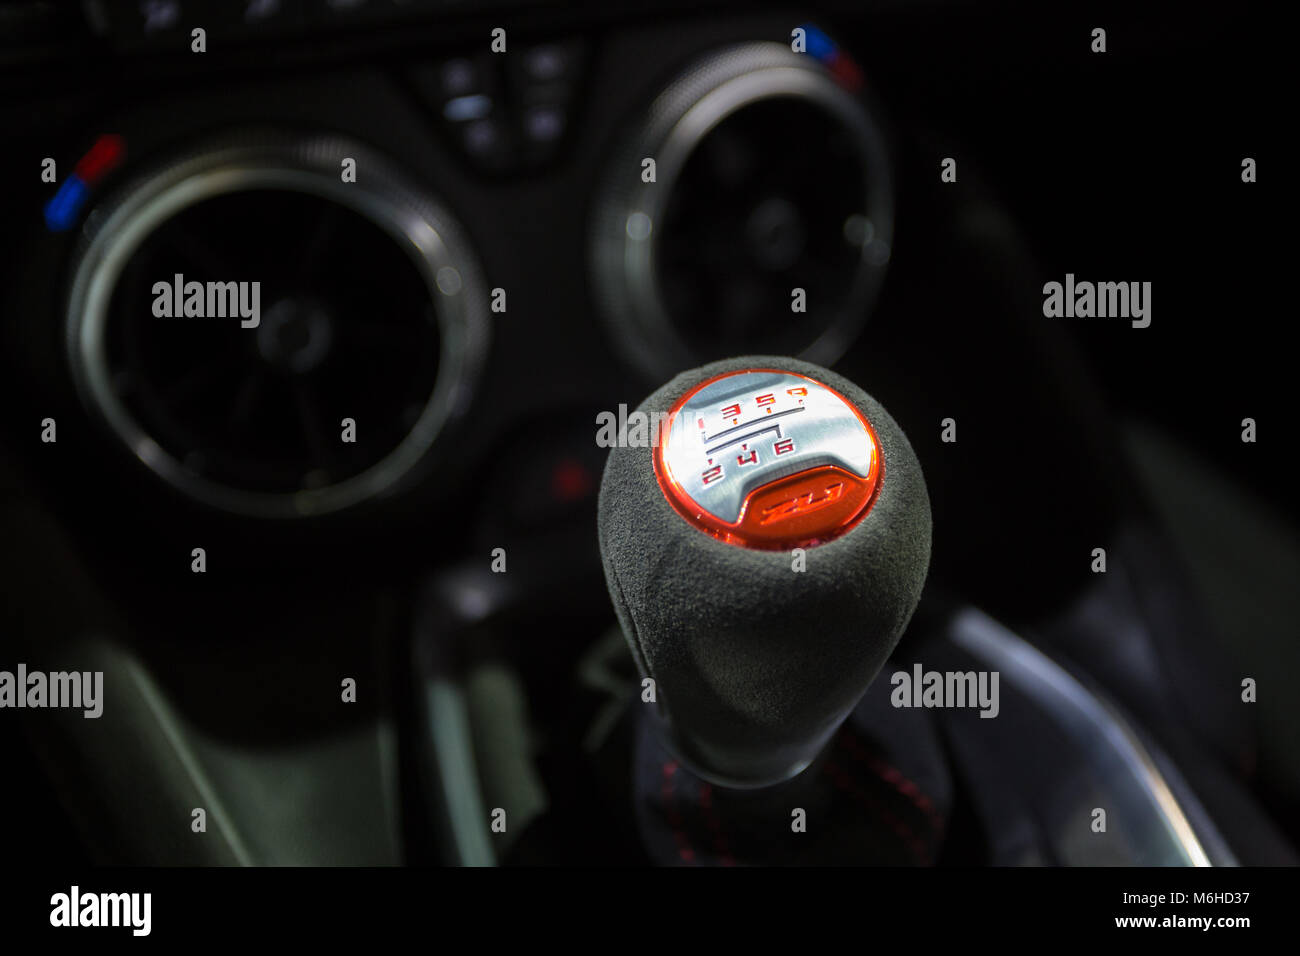 2019 Chevrolet Camaro ZL1 six speed manual transmission shift knob Stock  Photo - Alamy